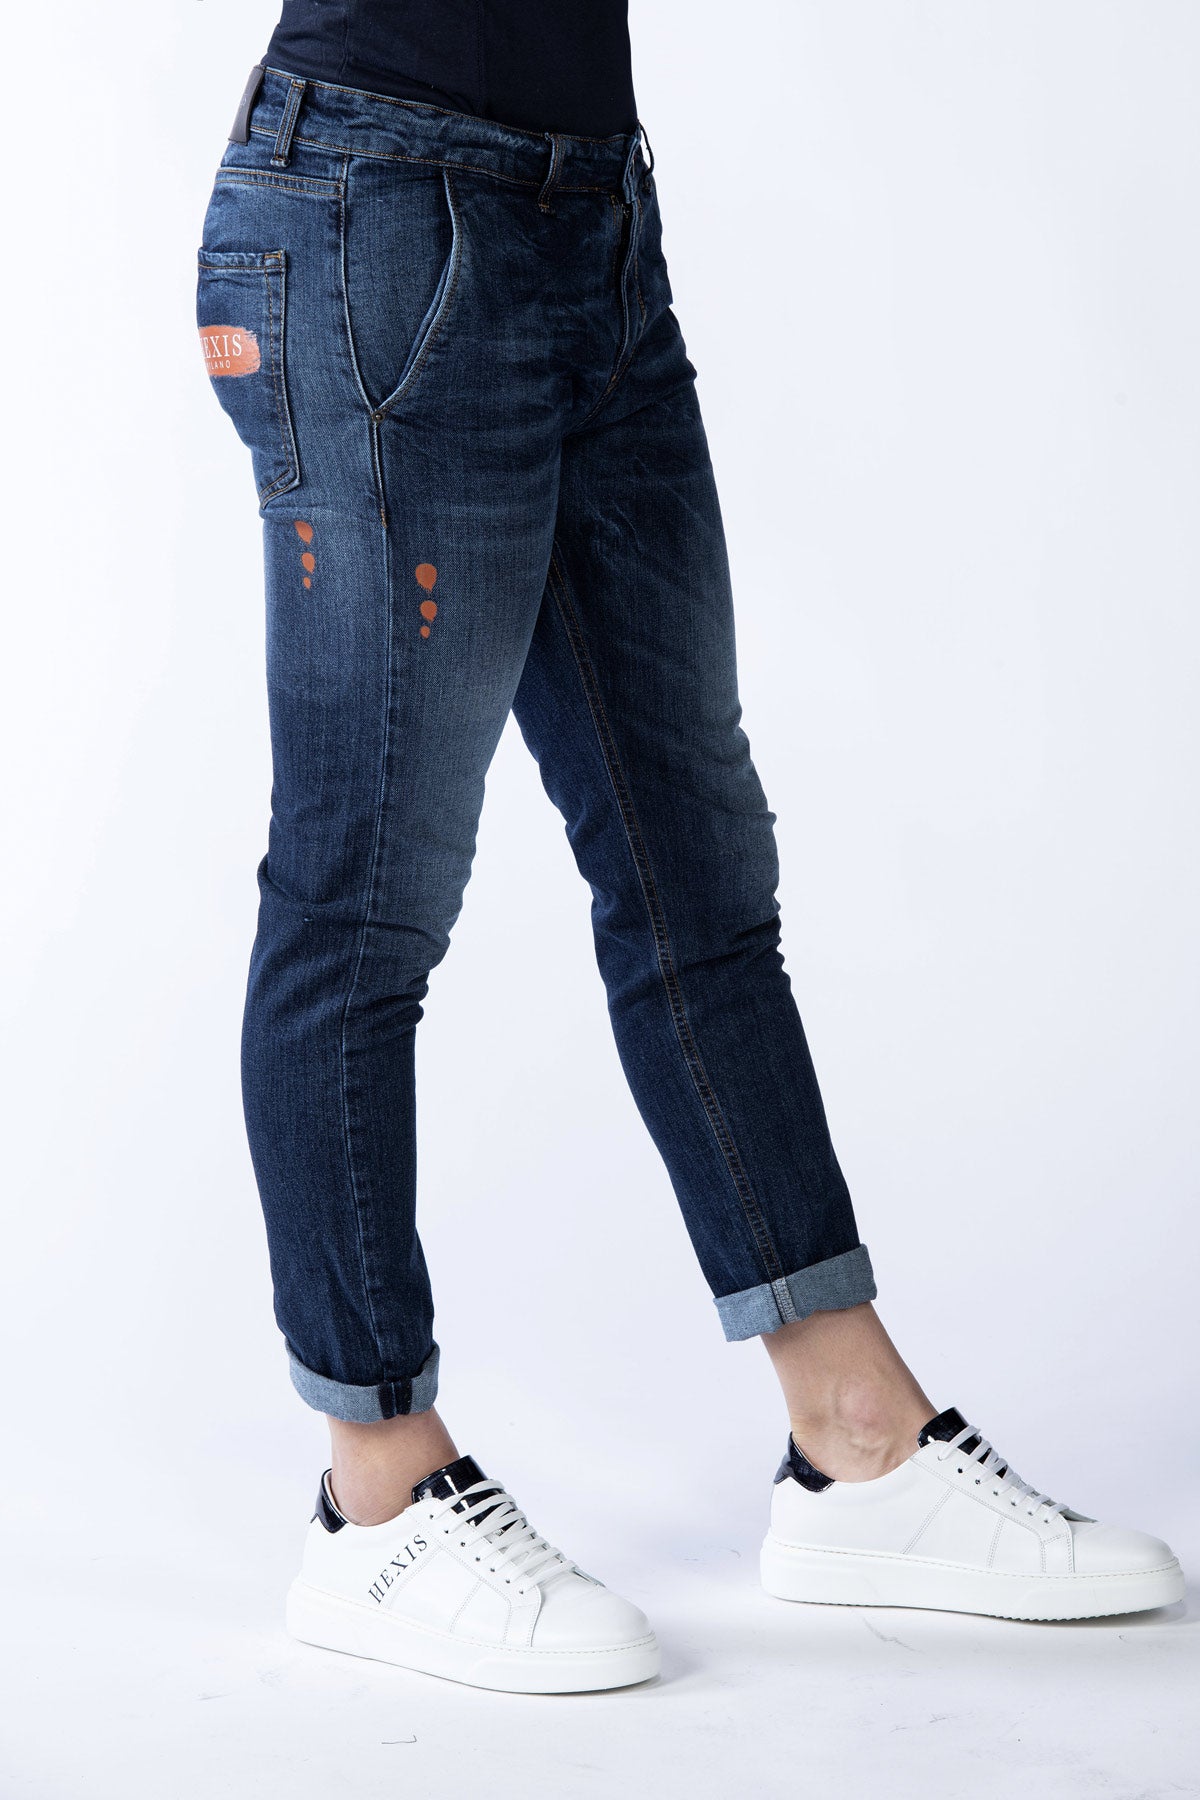 Beckton men's jeans america pocket